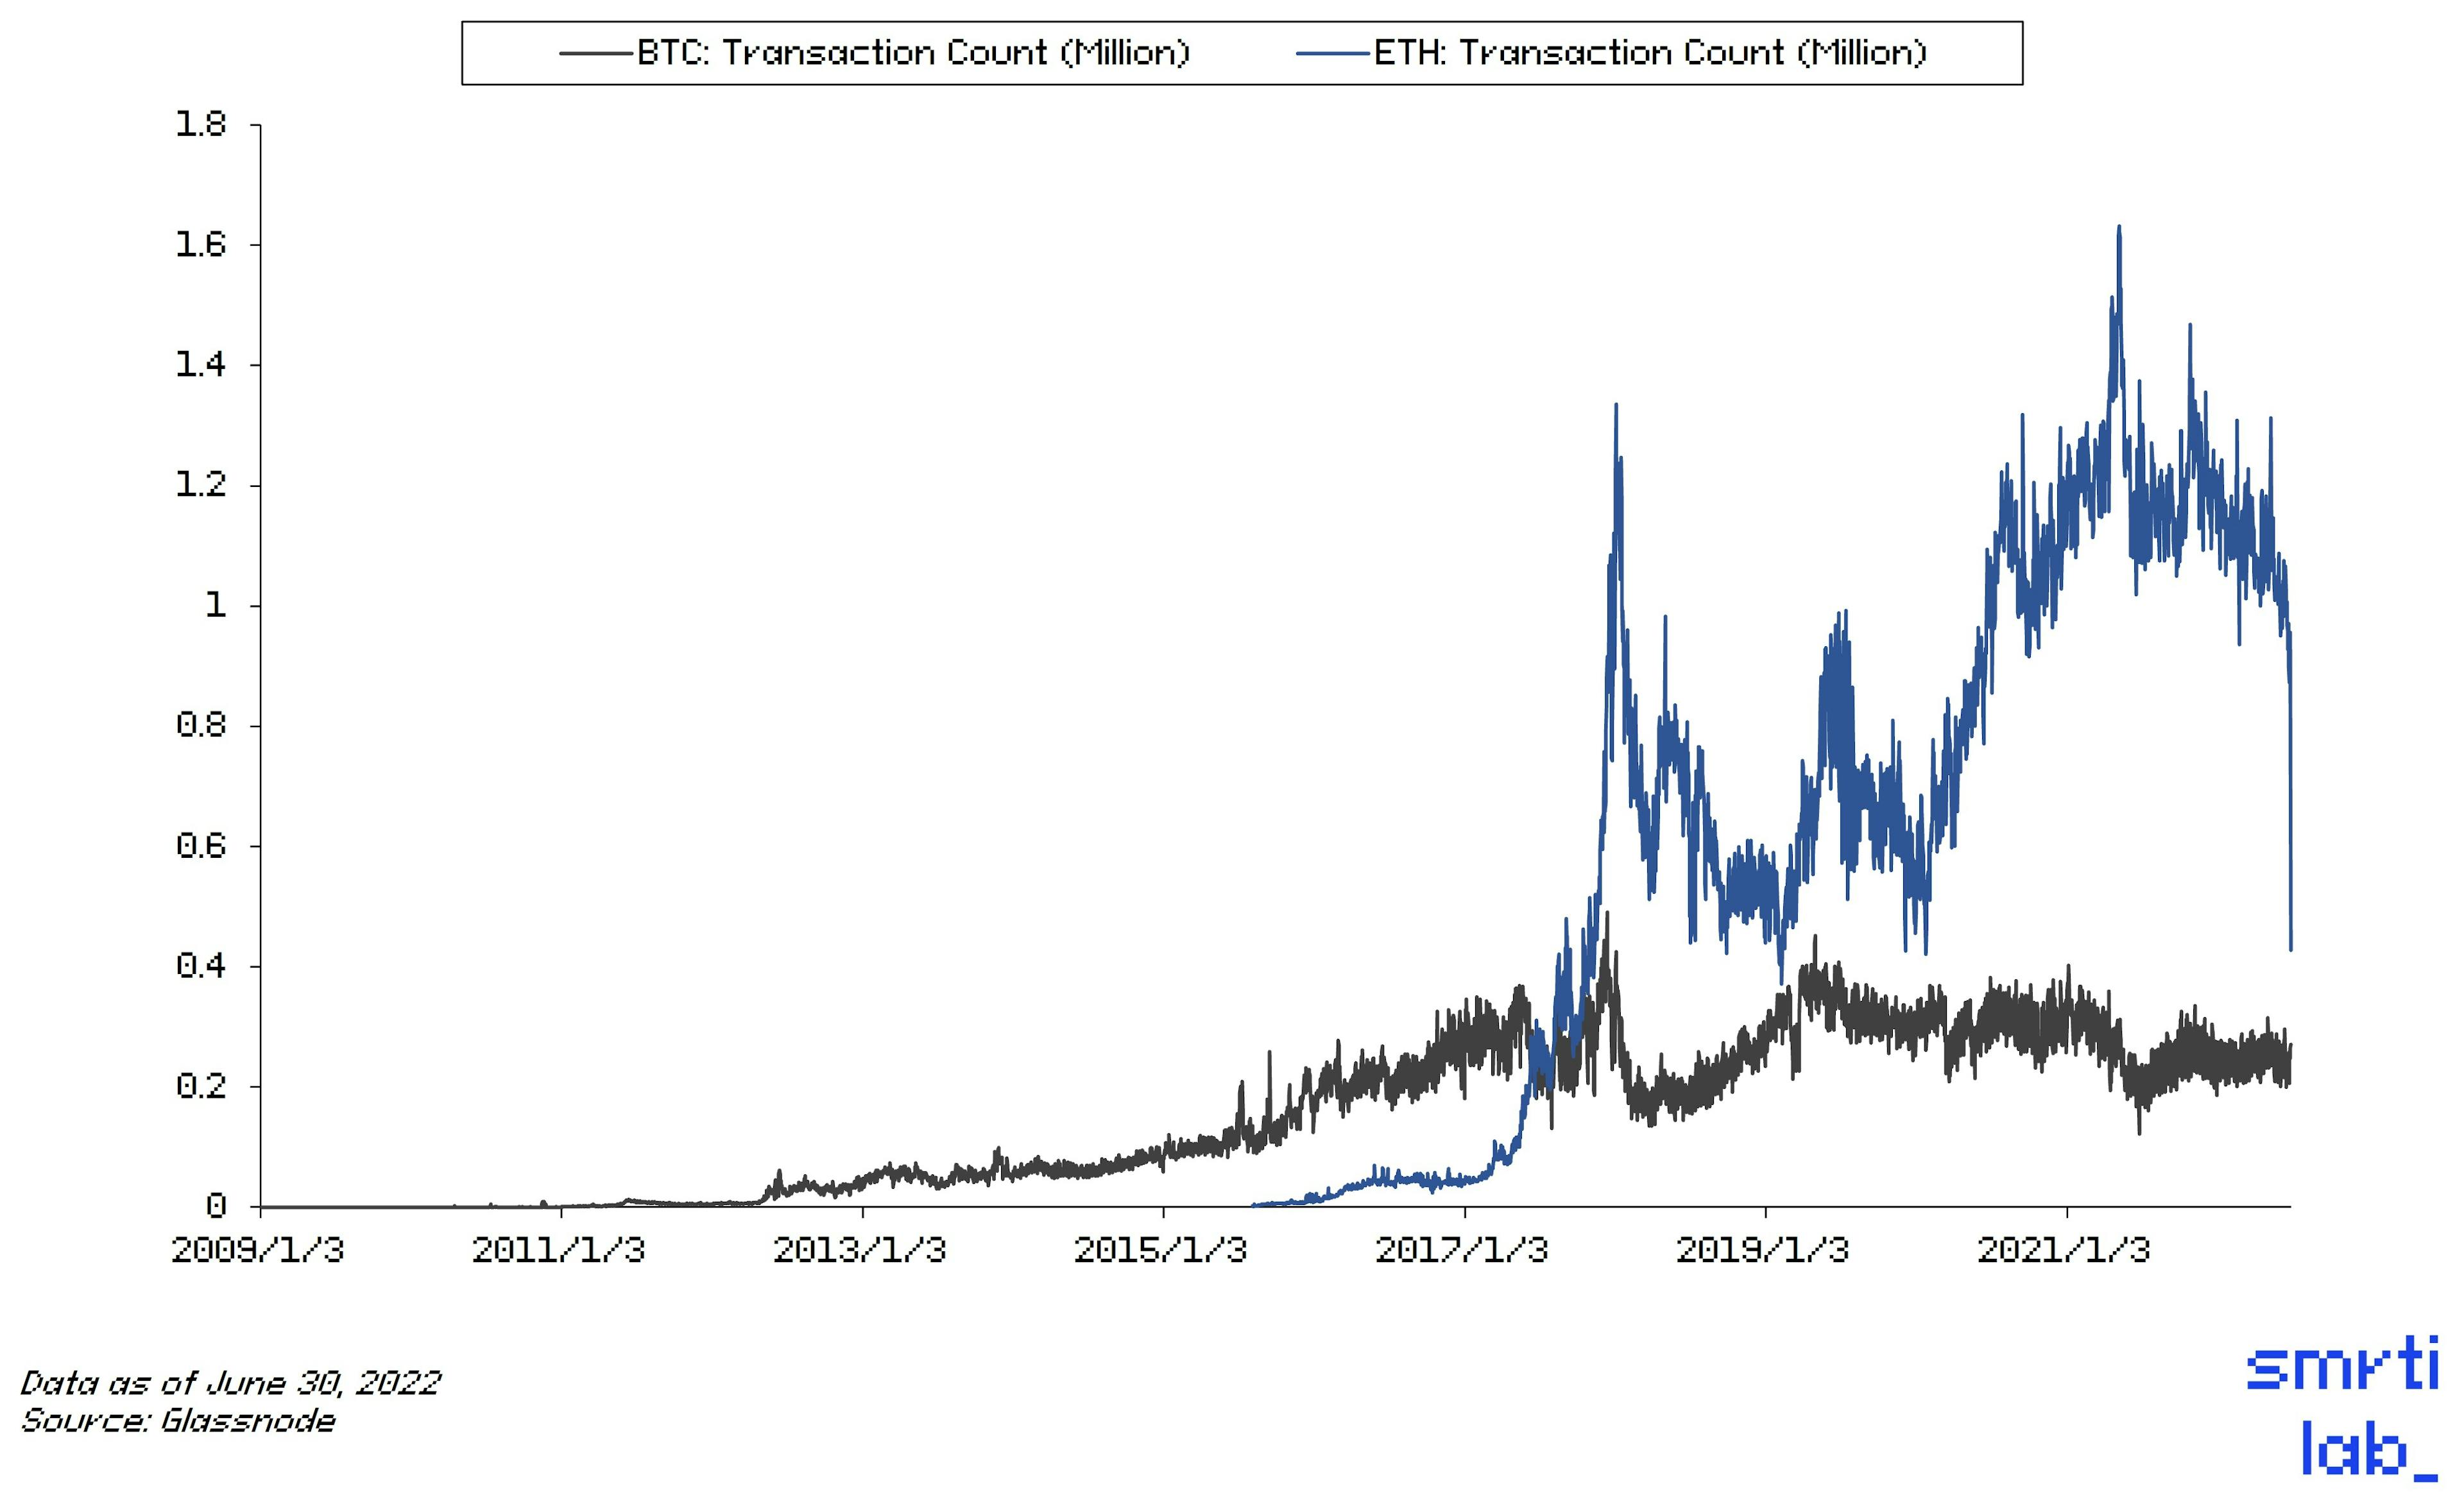 Figure 7: BTC Transaction Count lagging behind Ethereum during bull market